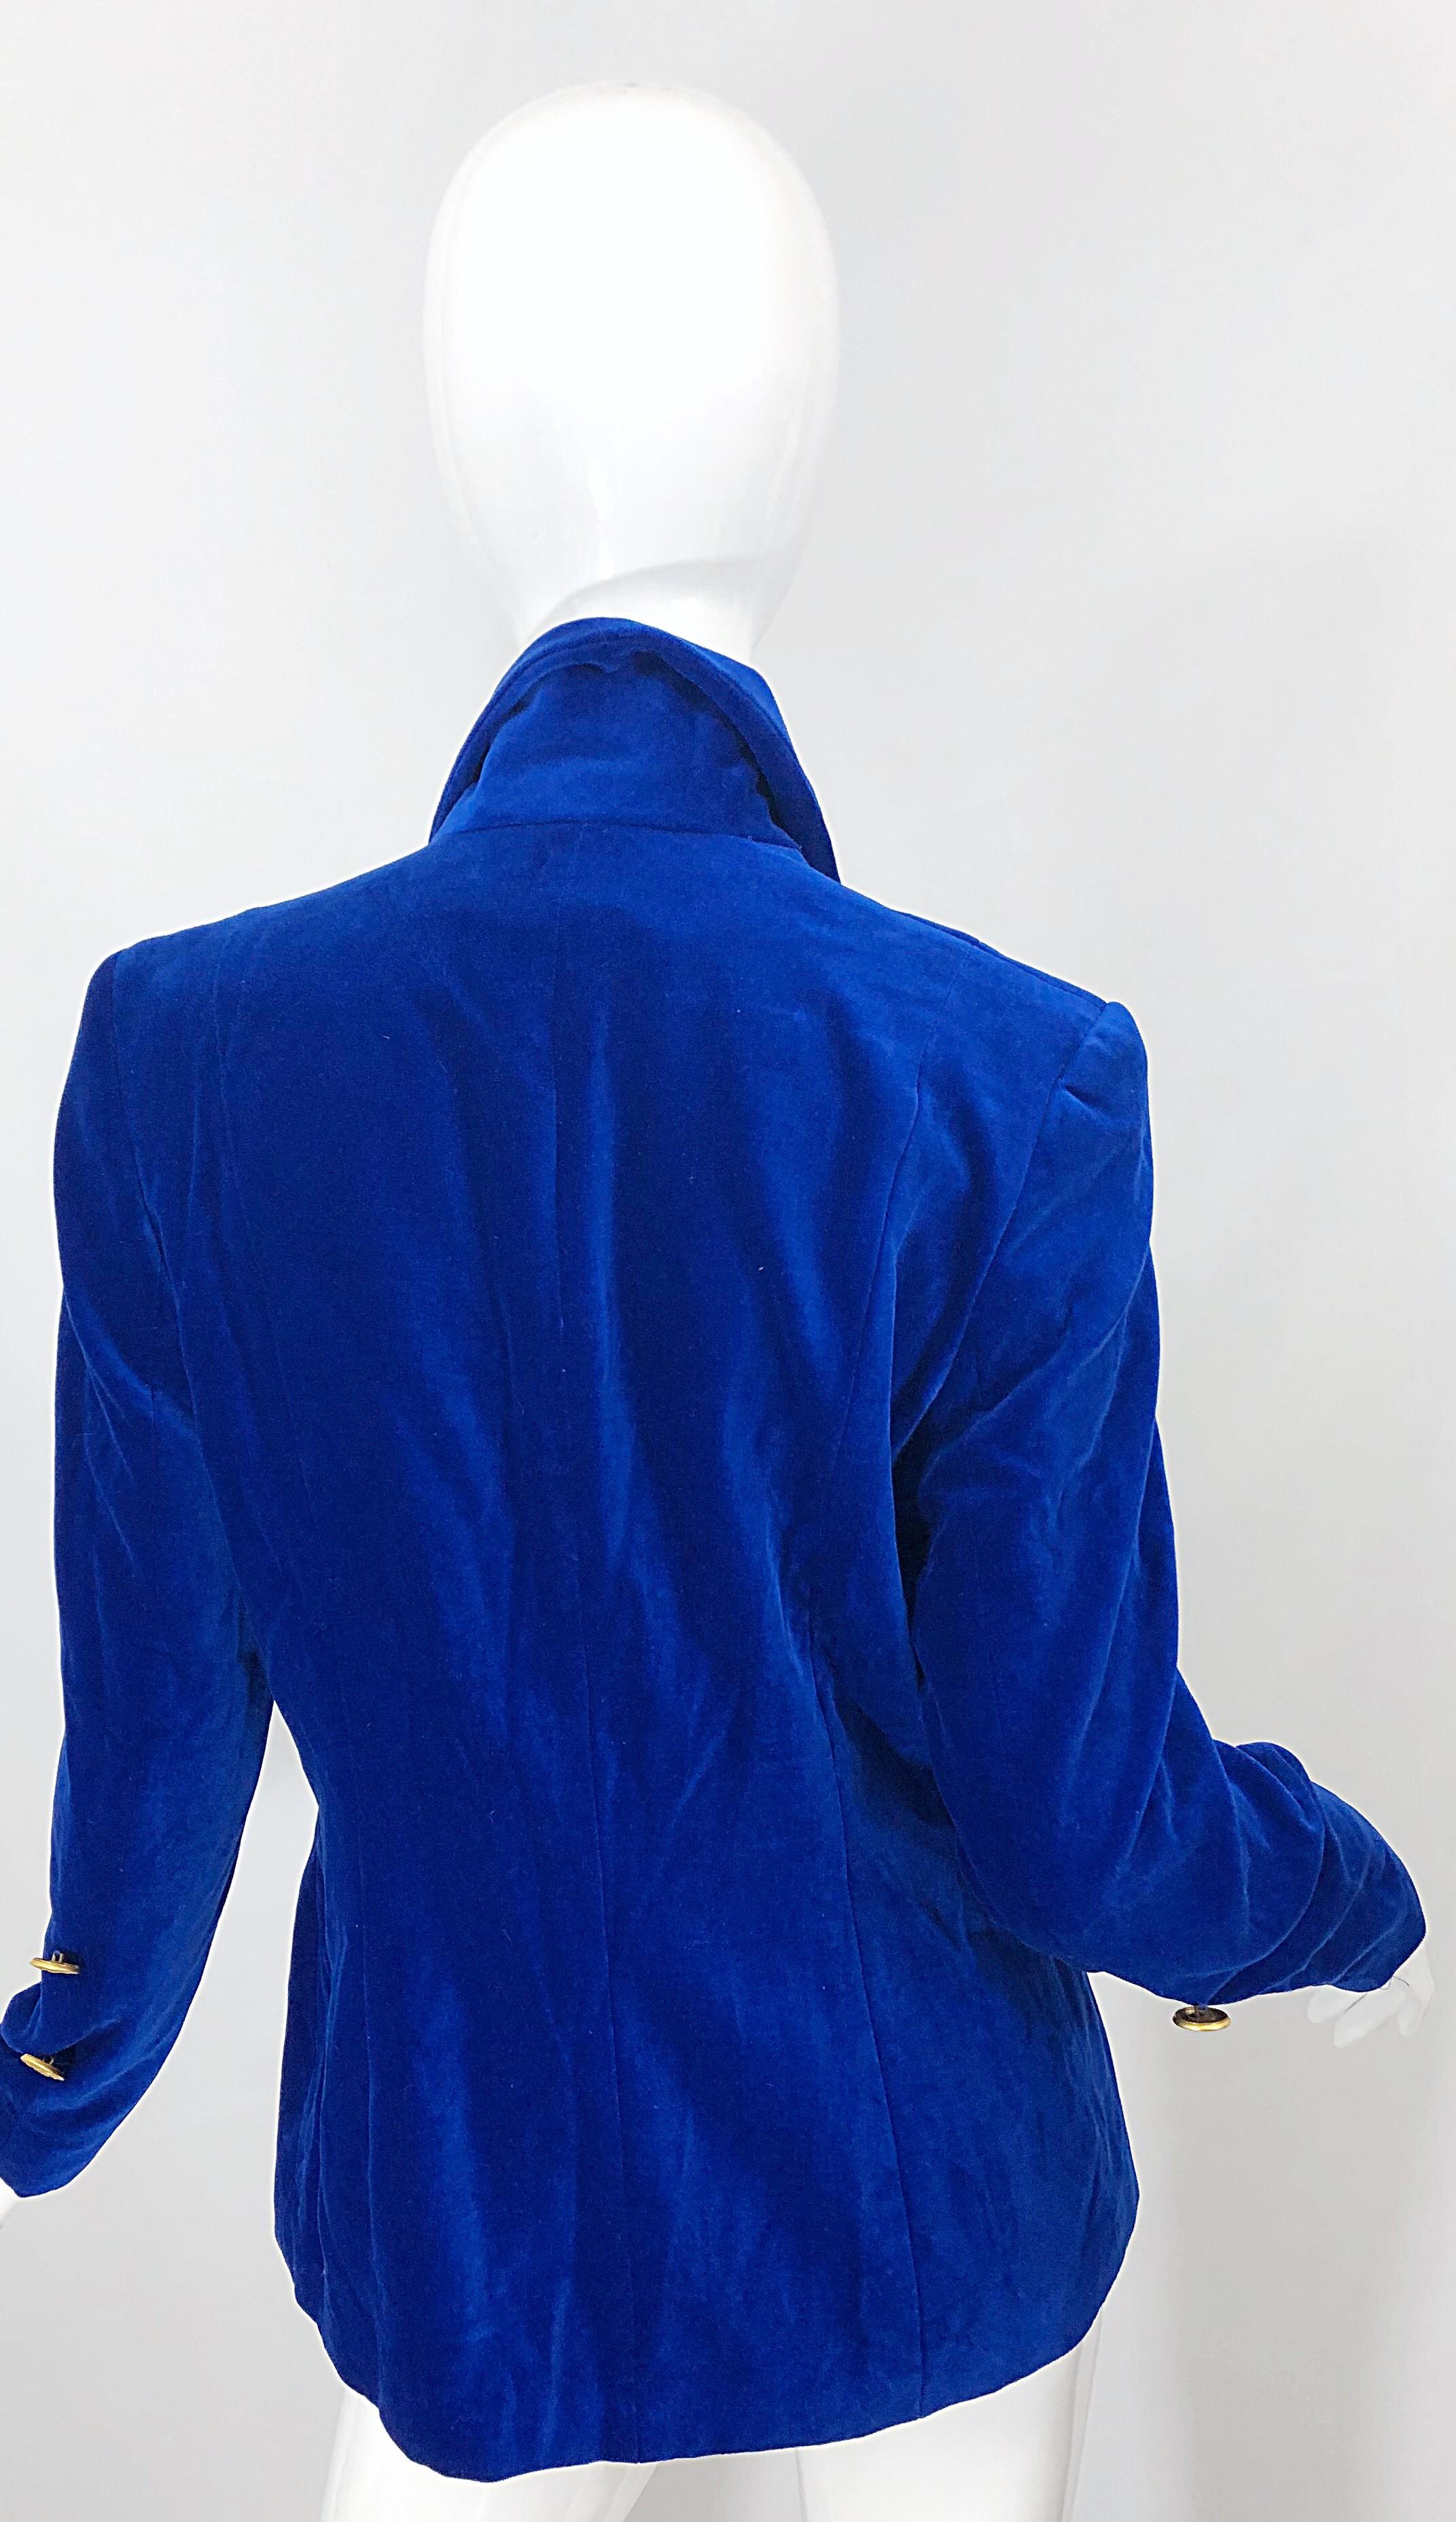 cerulean blue jacket